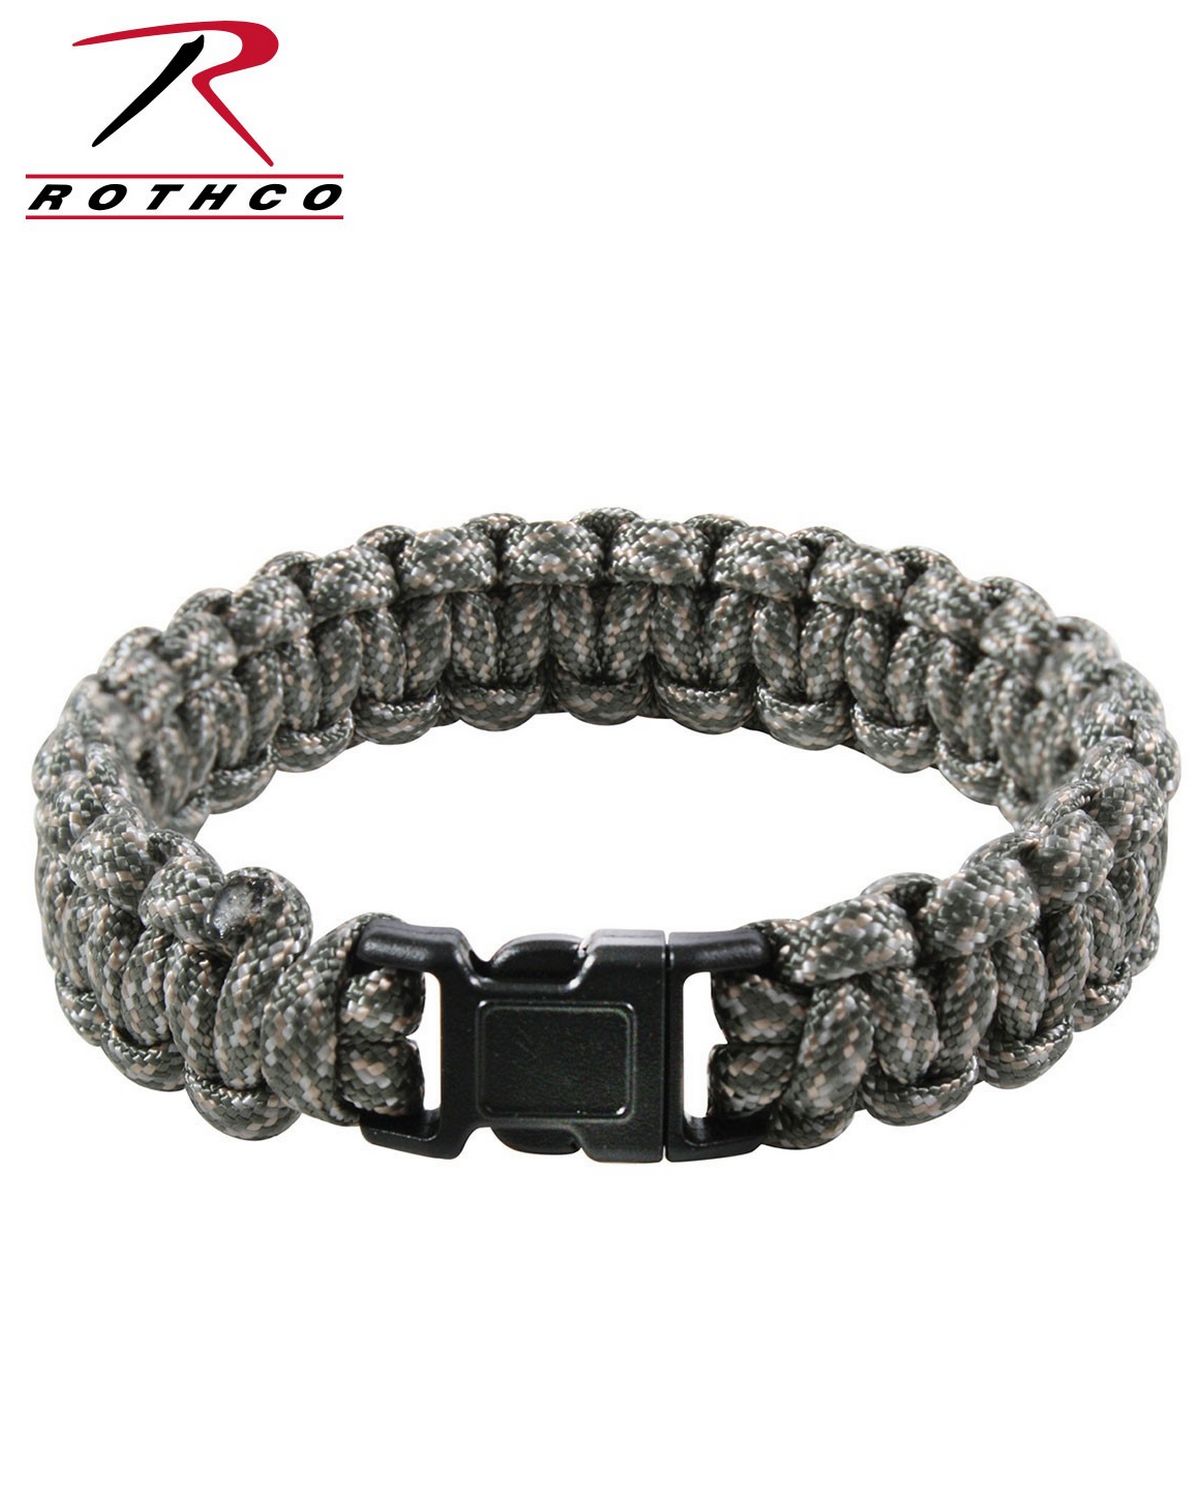 Two-Tone Paracord Bracelet, Rothco®